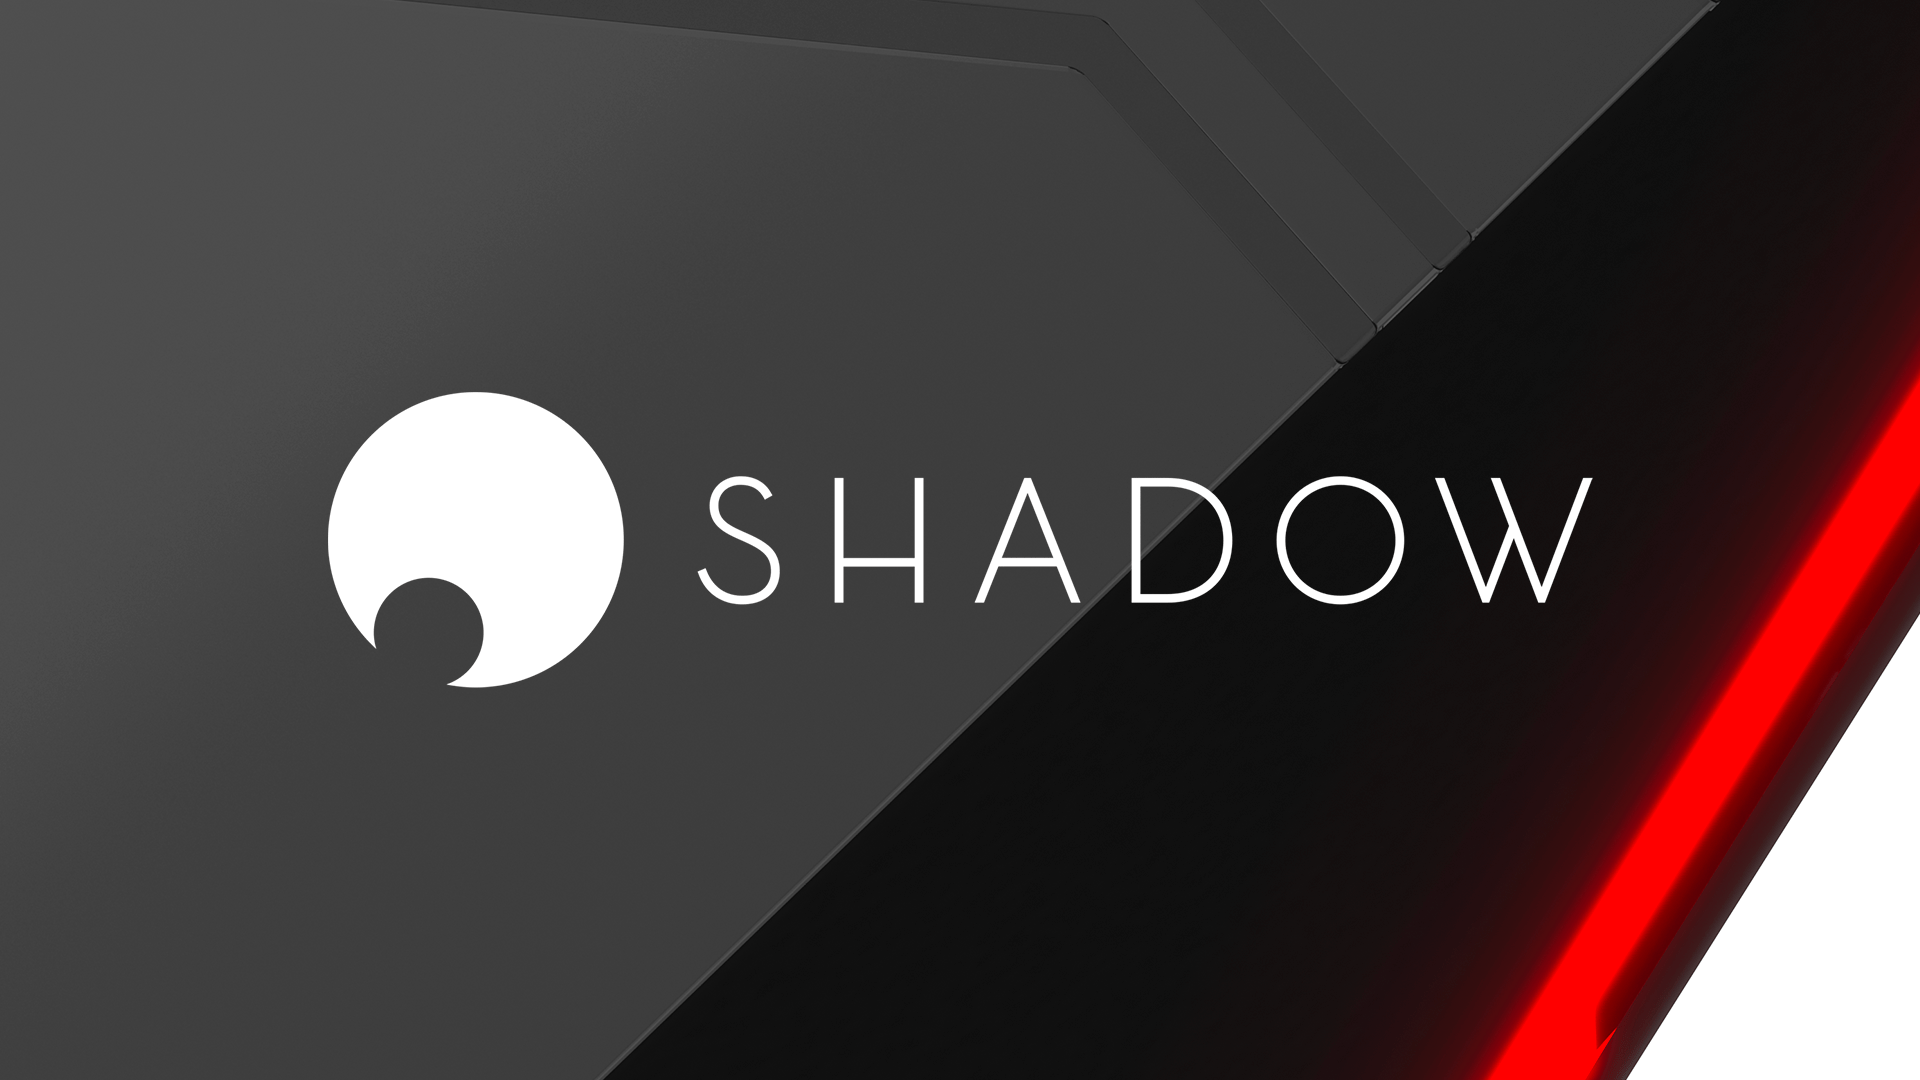 Blade : l'offre shadow devient plus accessible